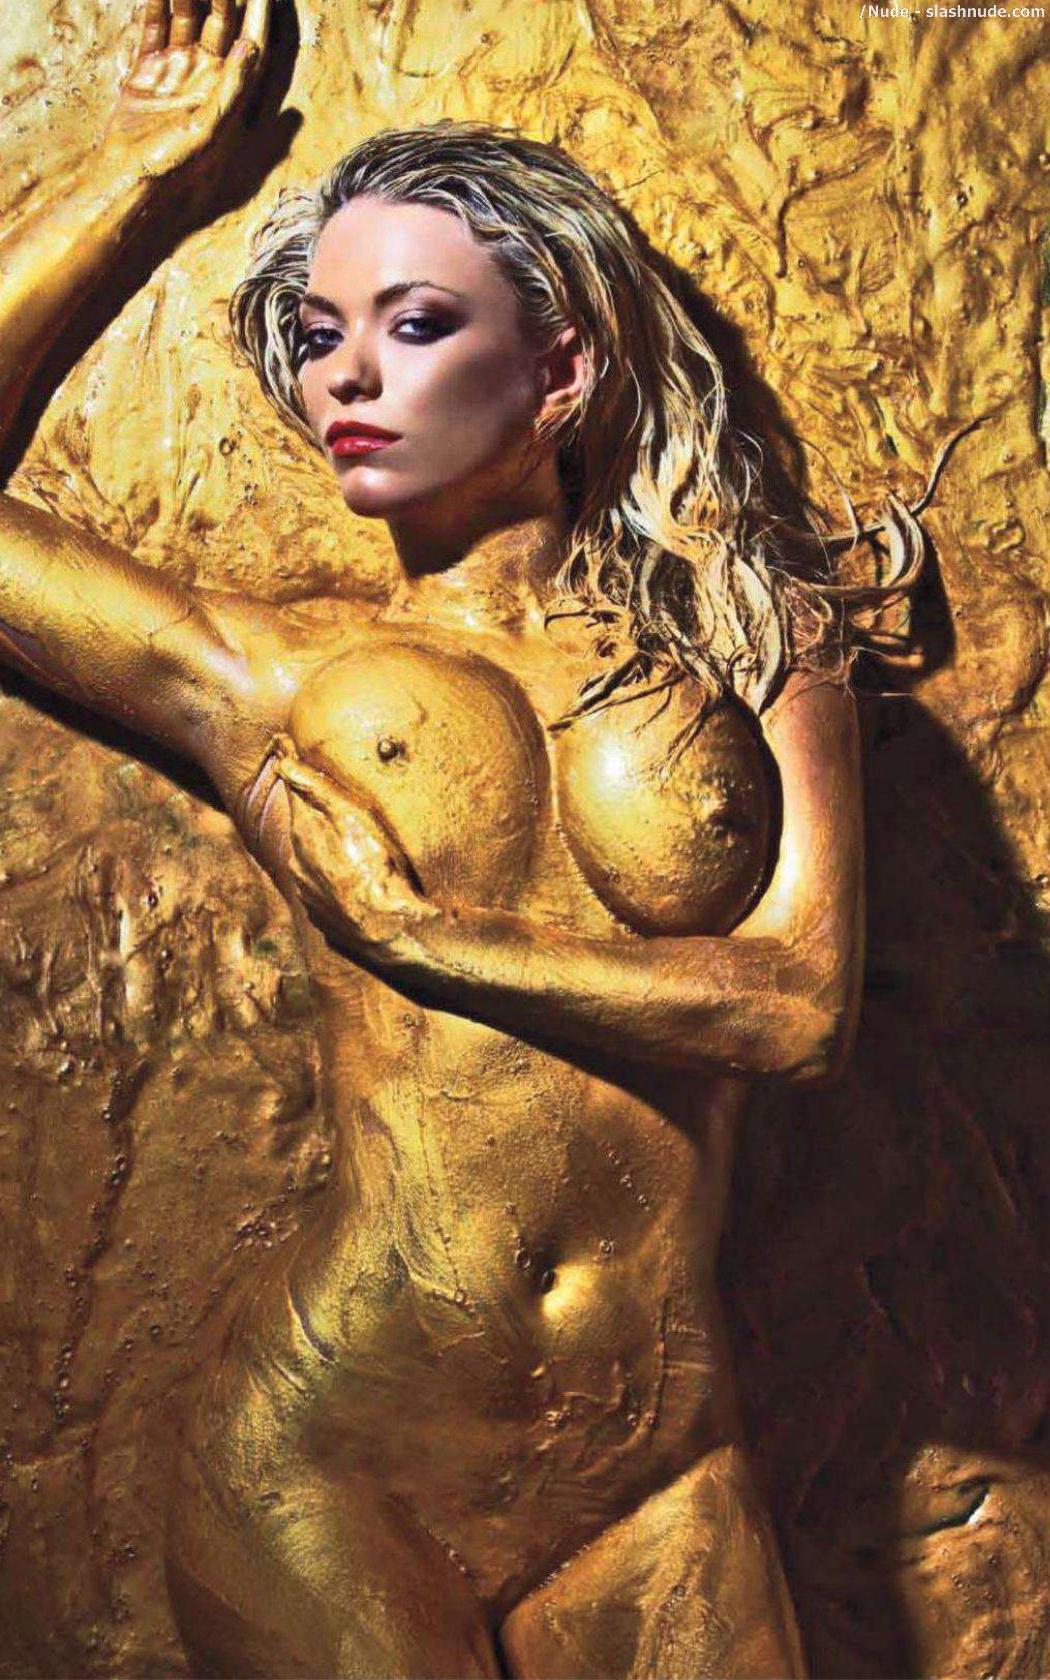 April Summers Nude Is Golden In Pb 5